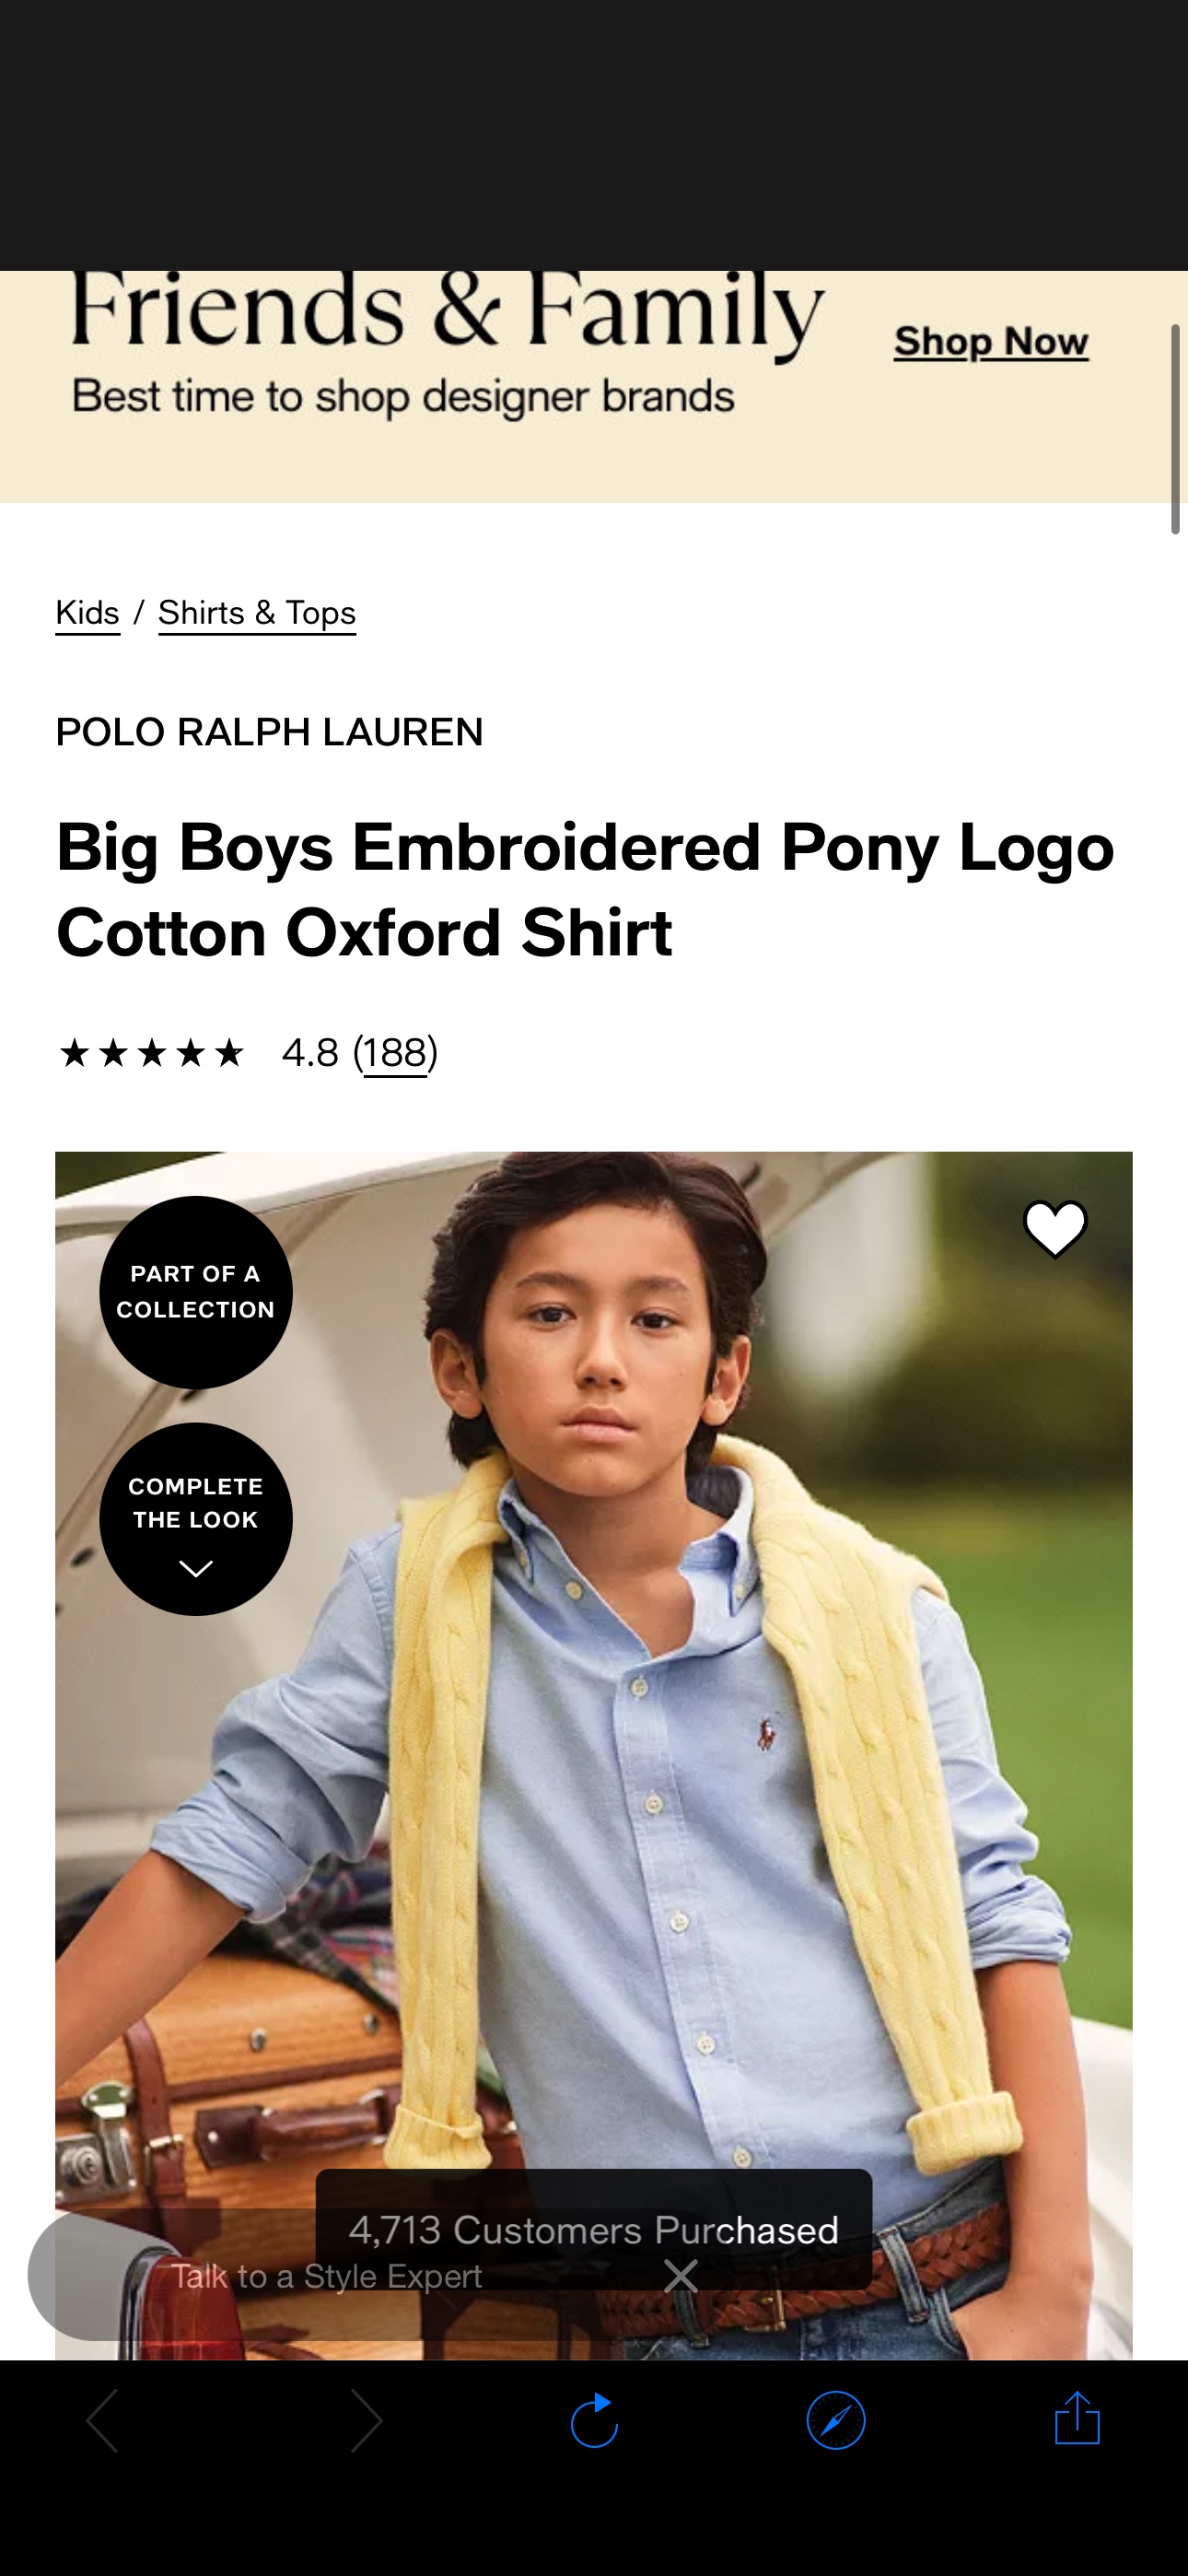 Polo Ralph Lauren Big Boys Embroidered Pony Logo Cotton Oxford Shirt - Macy's